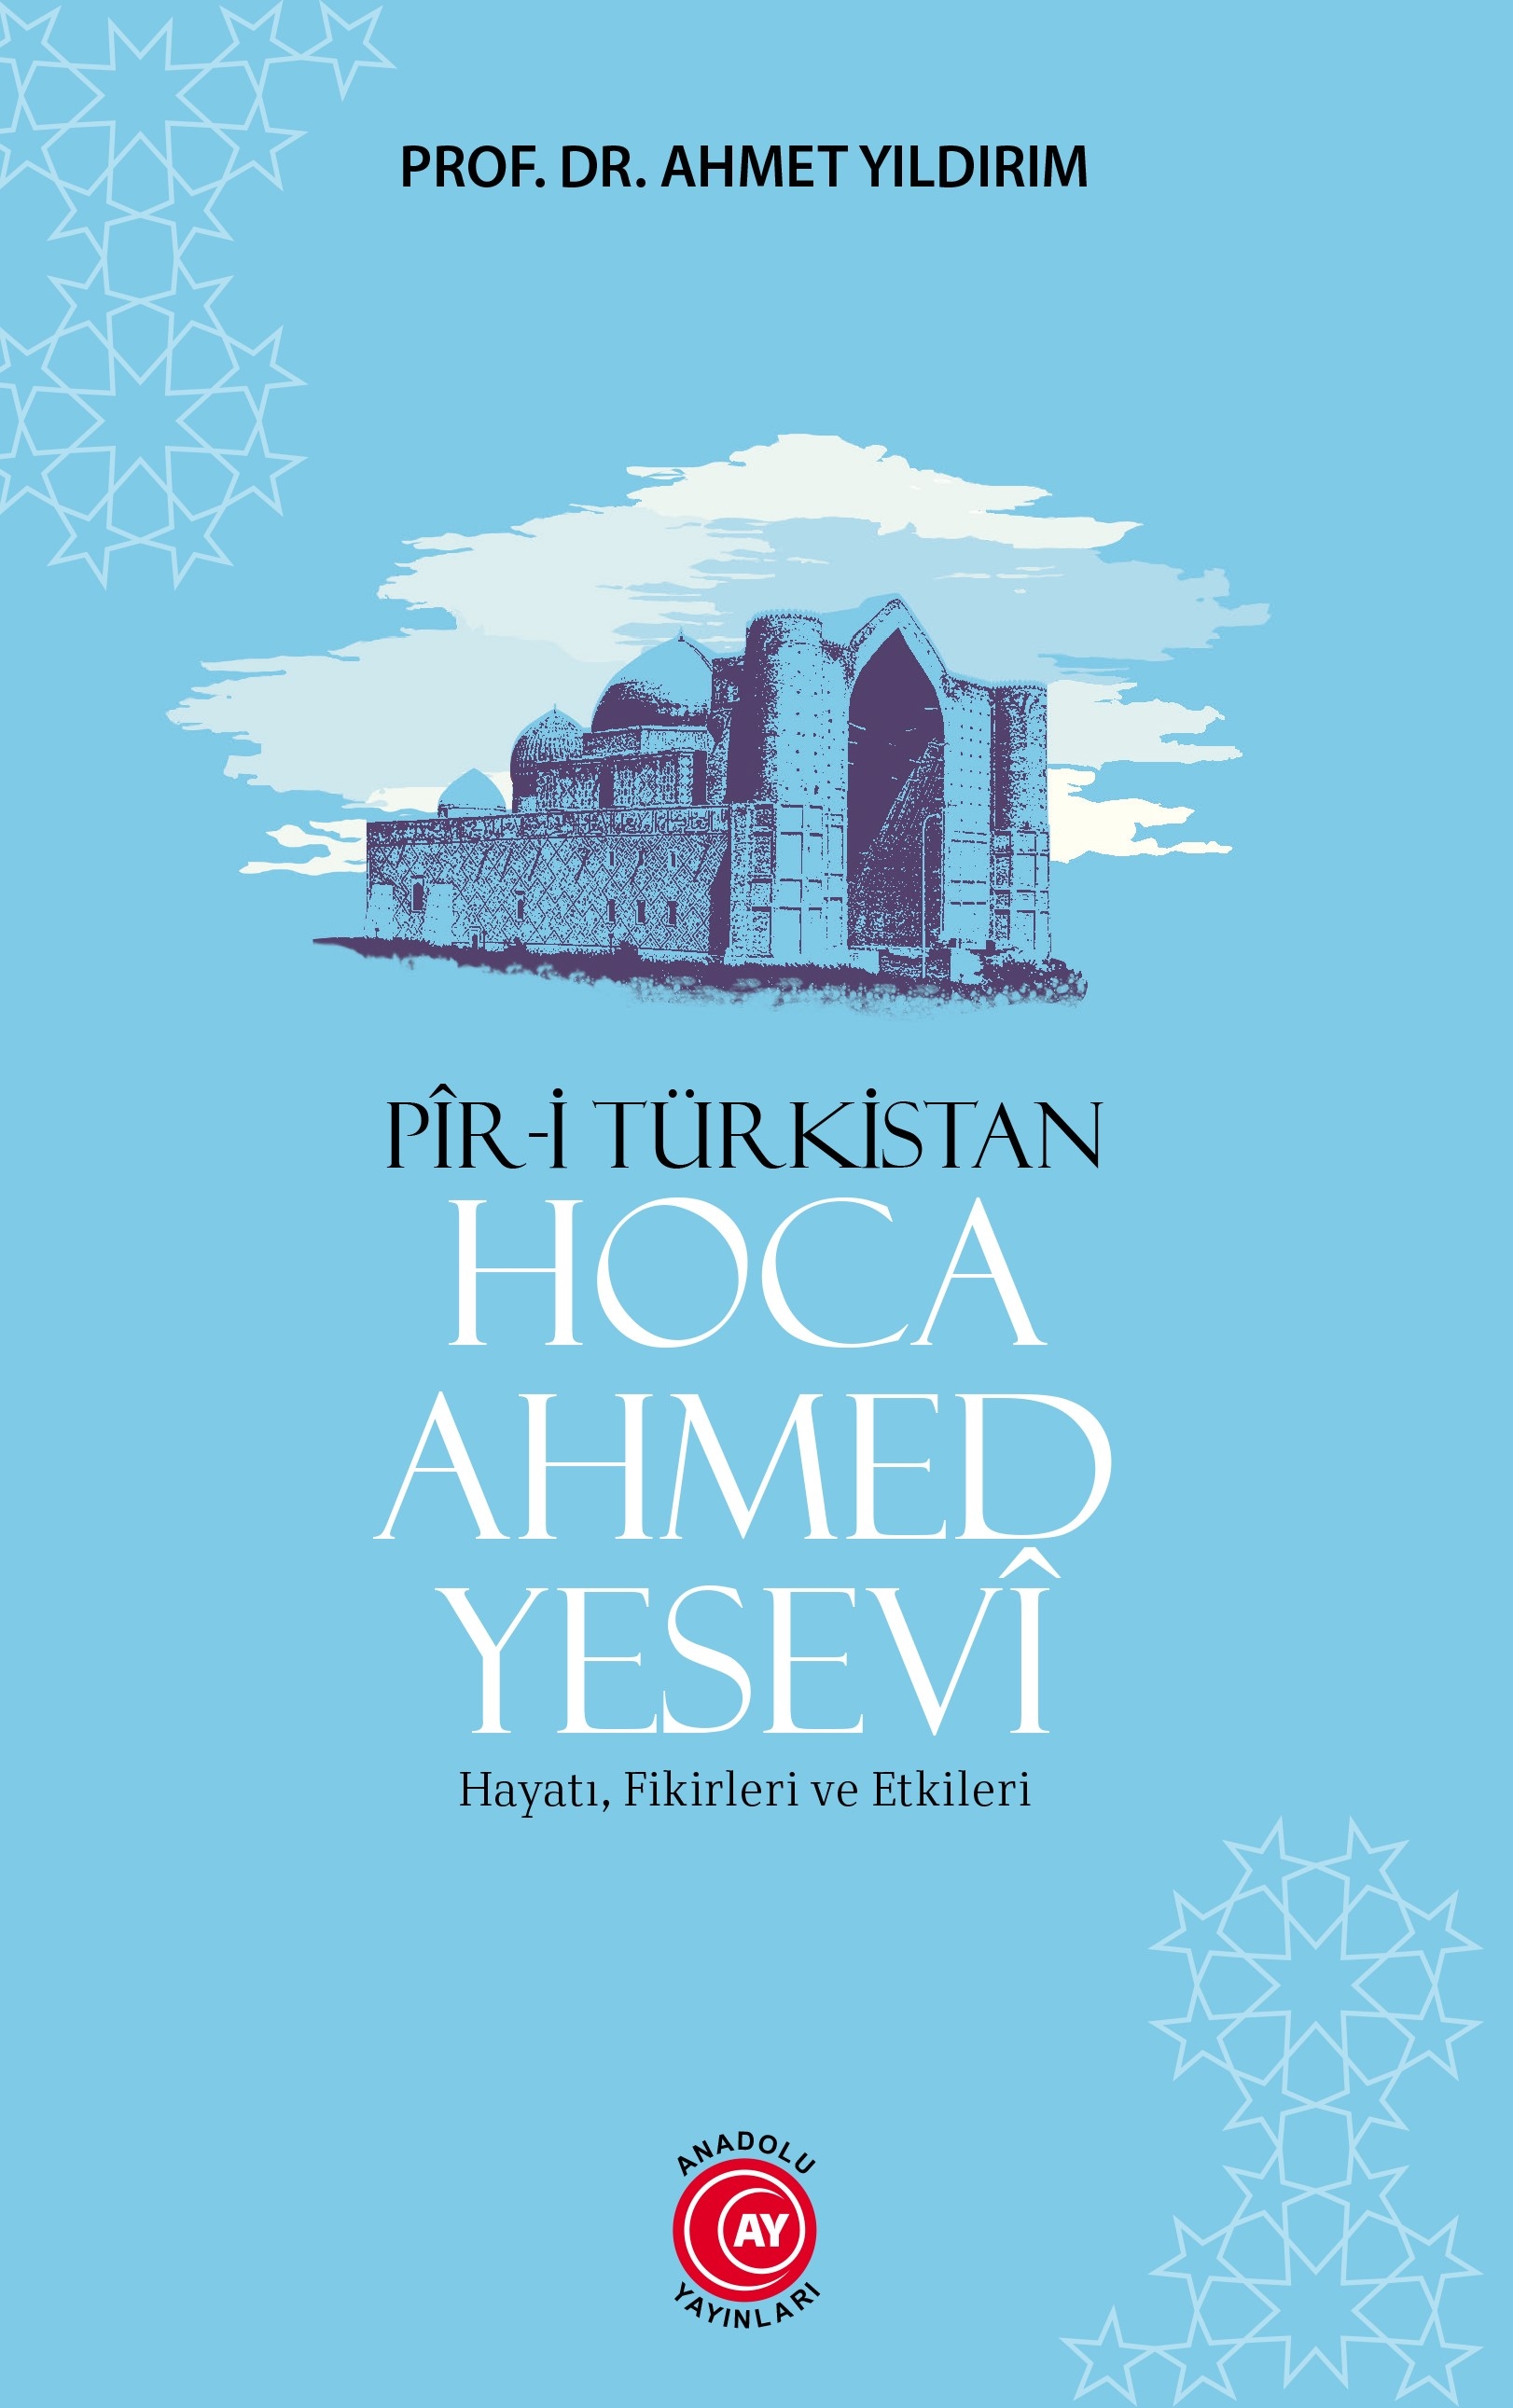 Pîr-İ Türkistan Hoca Ahmed Yesevî - Prof. Dr. Ahmet Yıldırım 